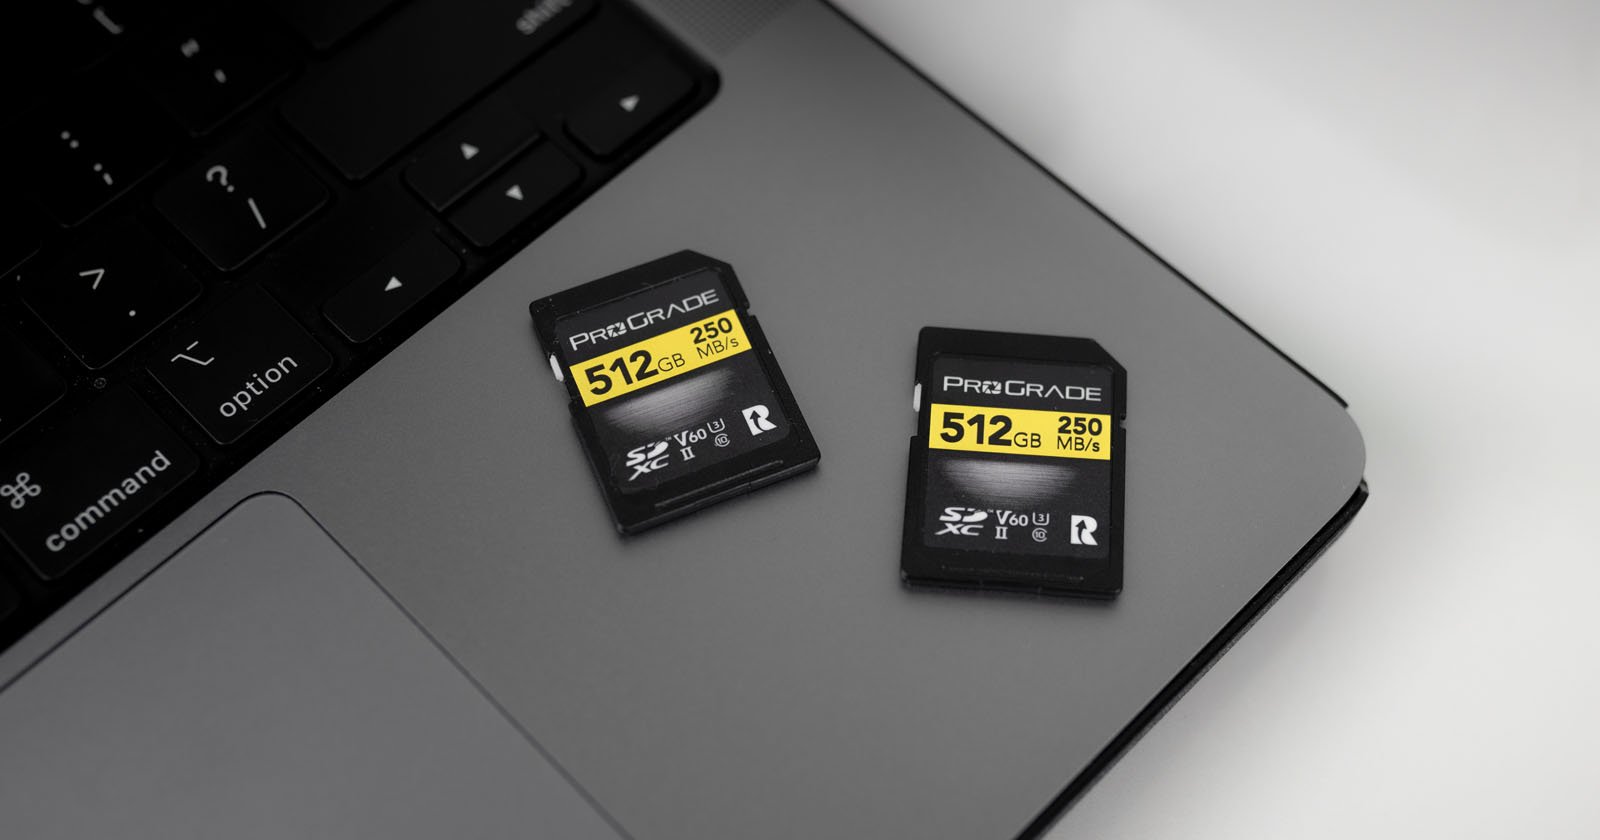 512GB SDXC UHS-II V90 Memory Card